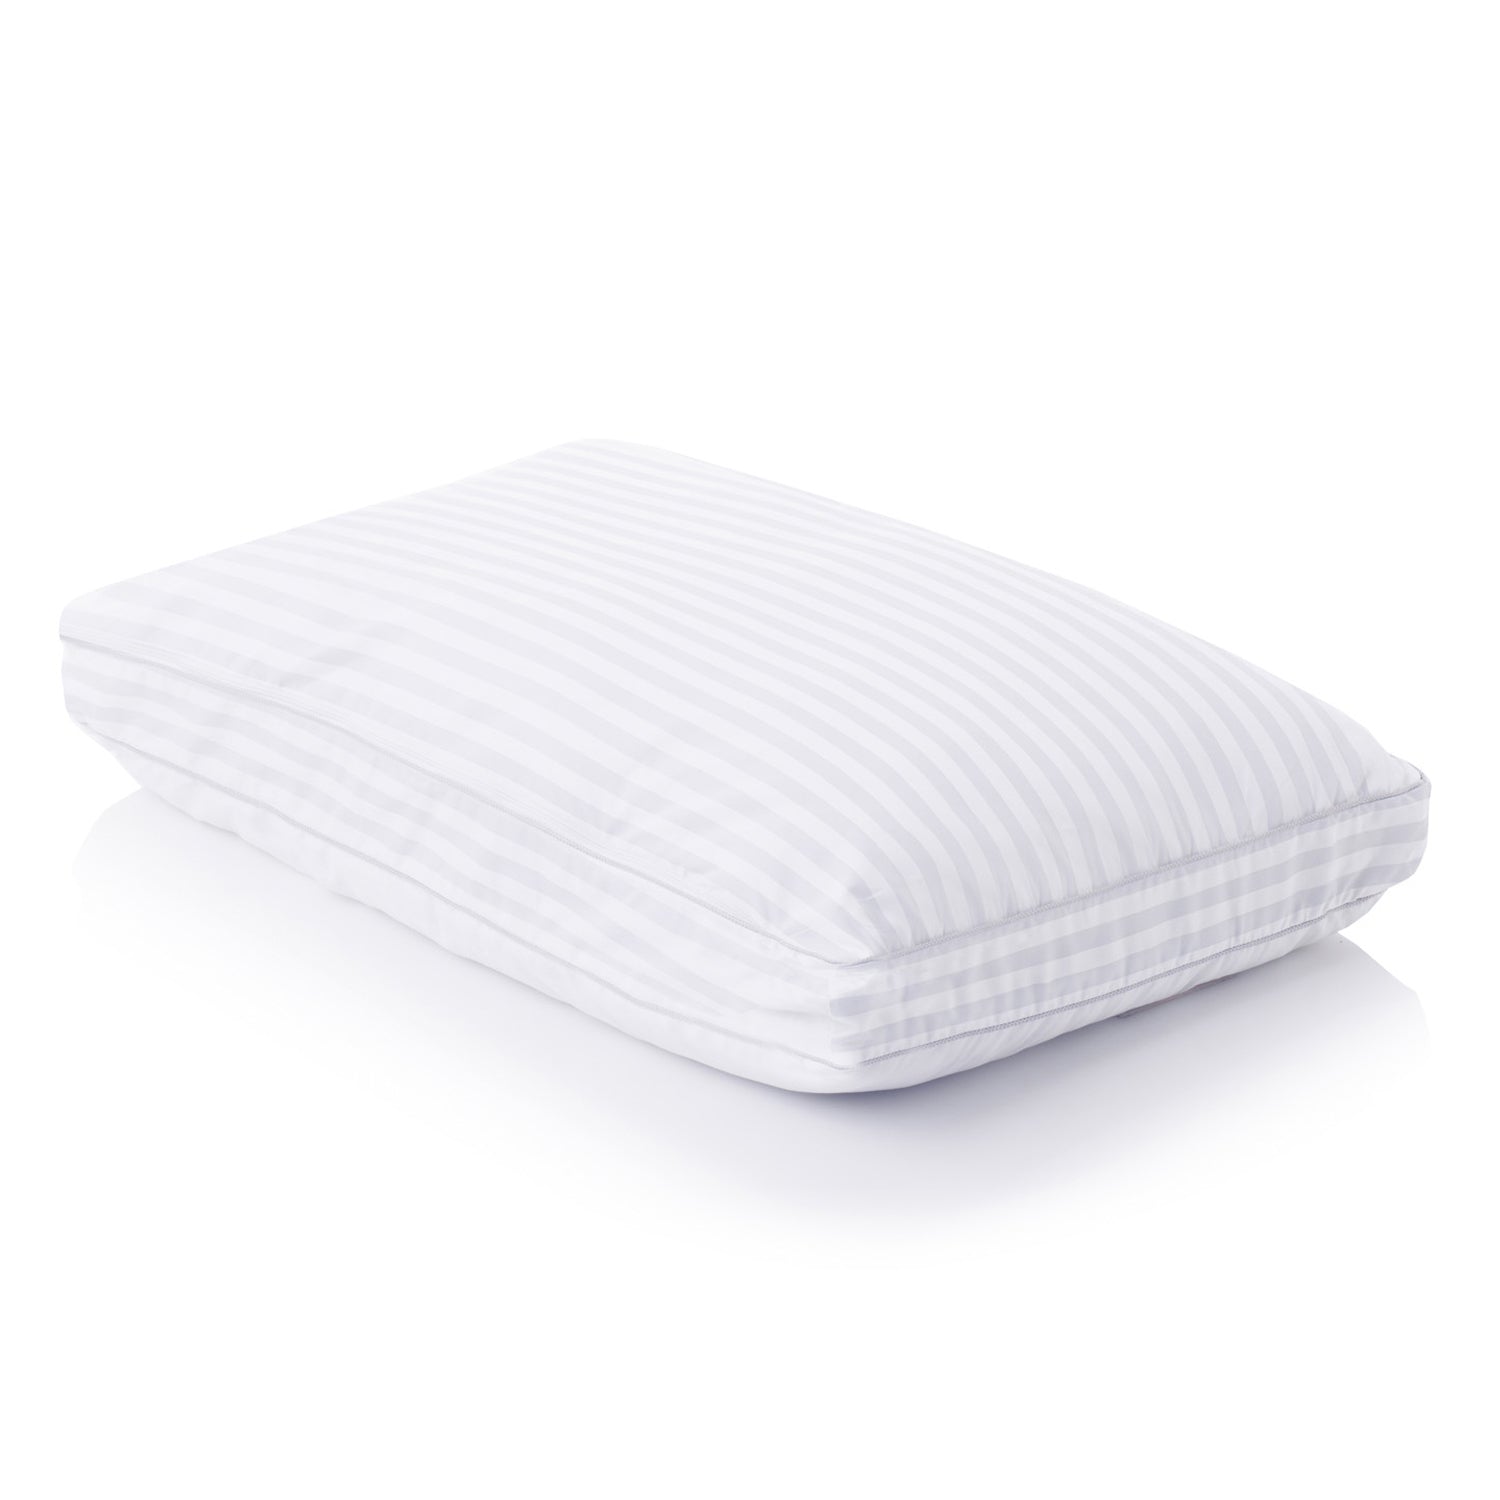 Convolution Pillow - Ultimate Comfort Sleep